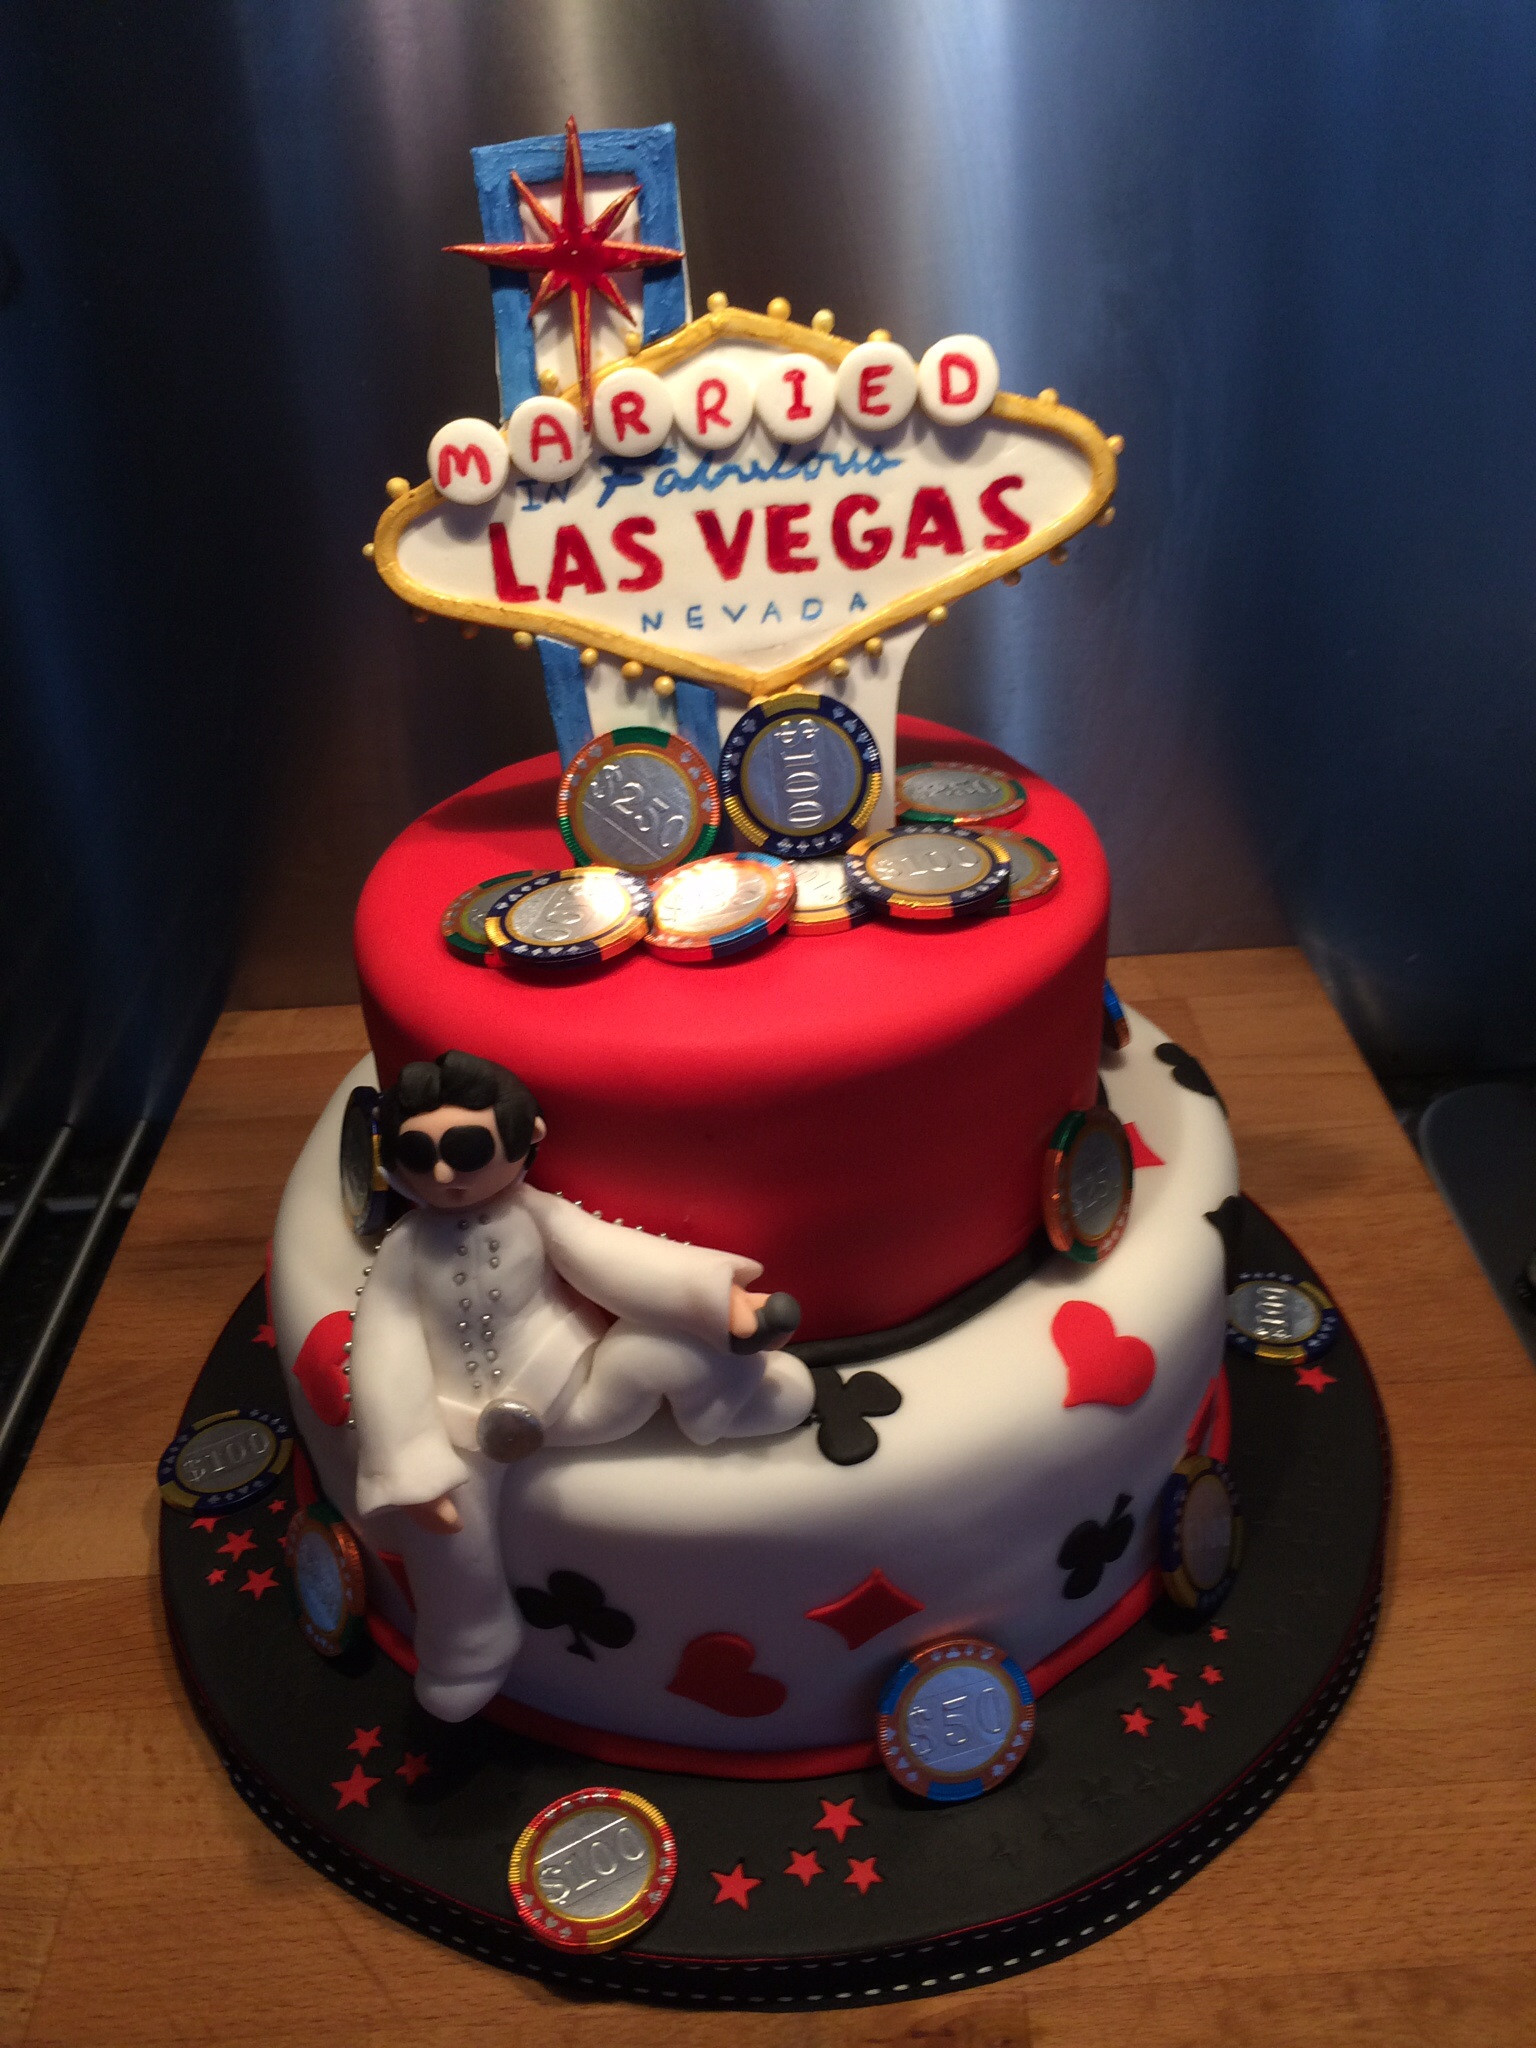 Las Vegas Wedding Cakes
 Las vegas wedding cakes idea in 2017